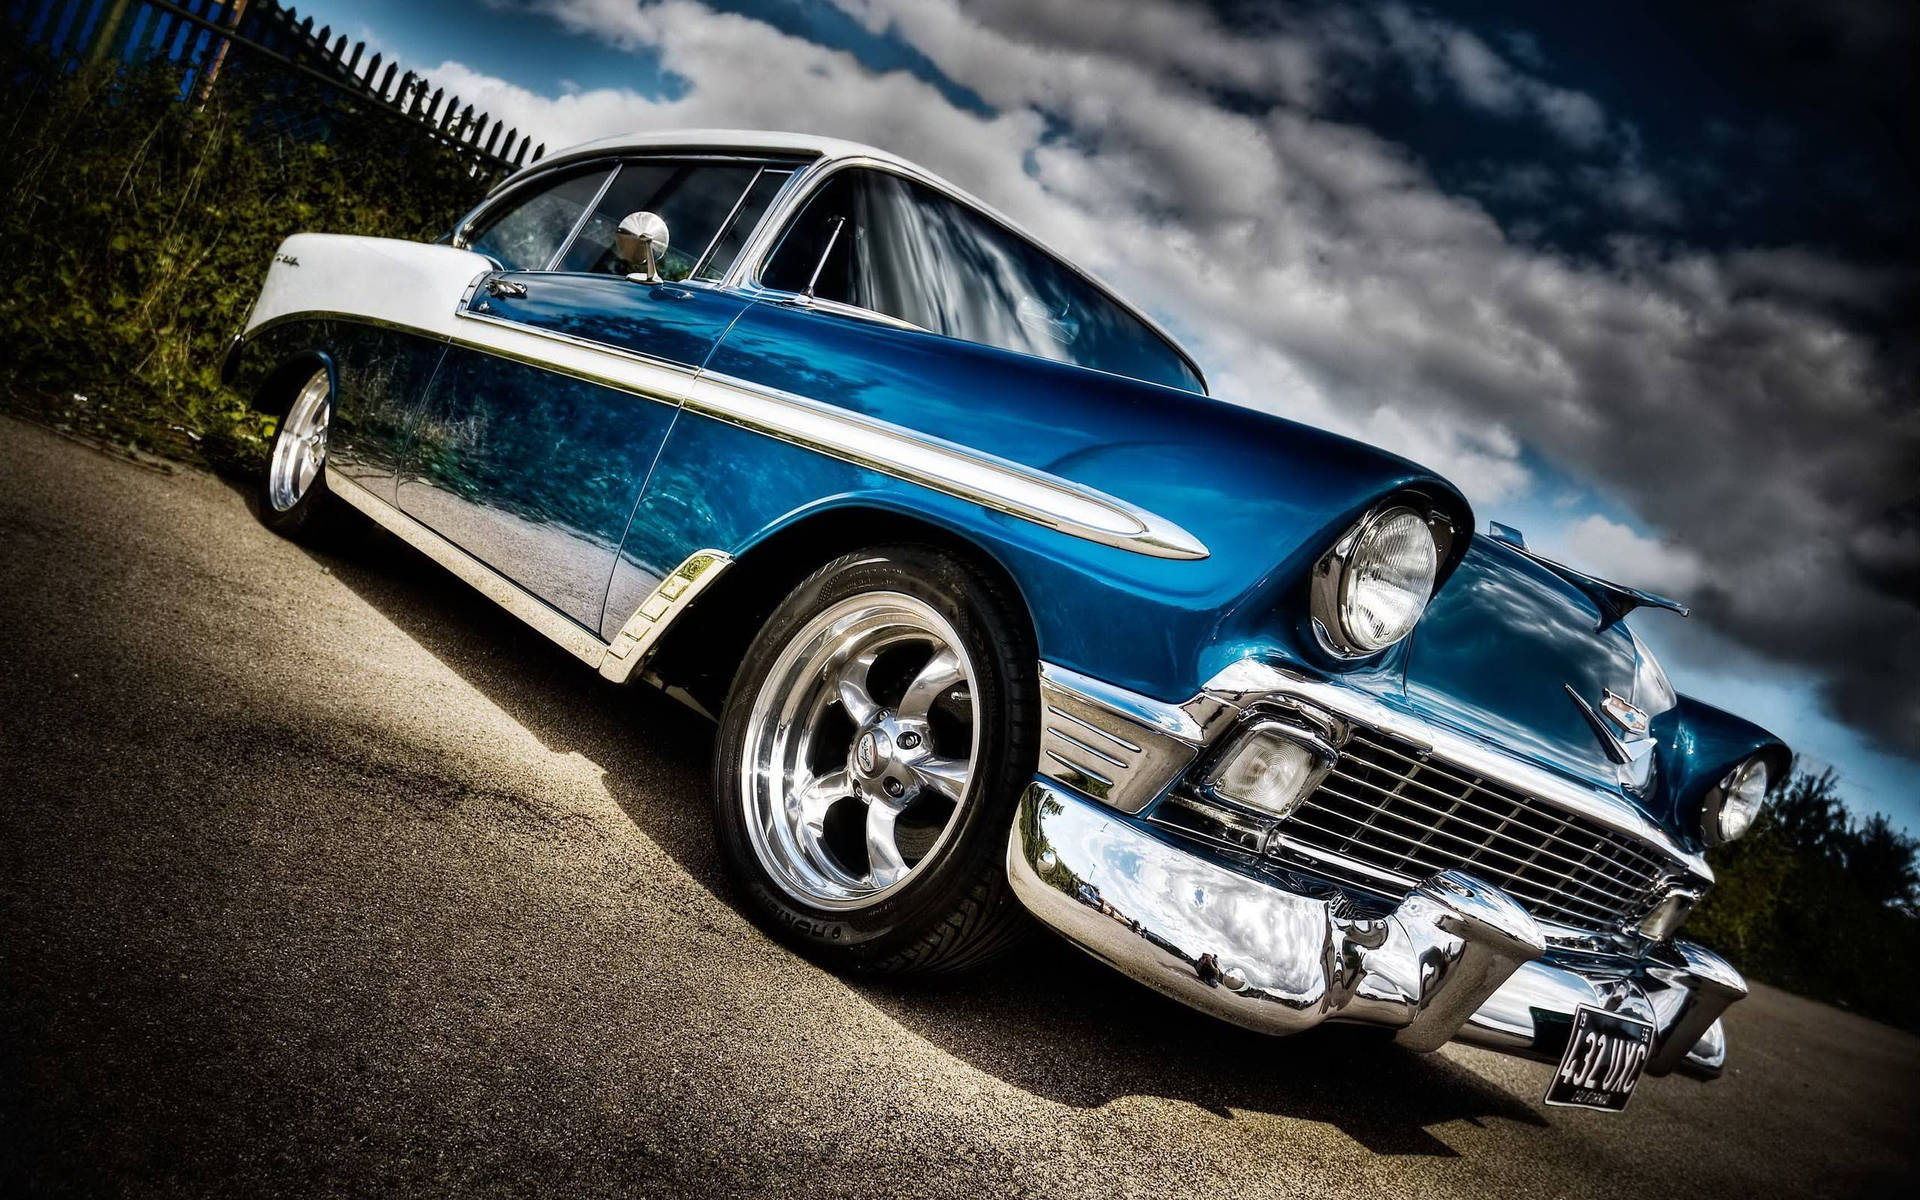 Vinklet-Skud Klassiske Blå Chevrolet Wallpaper